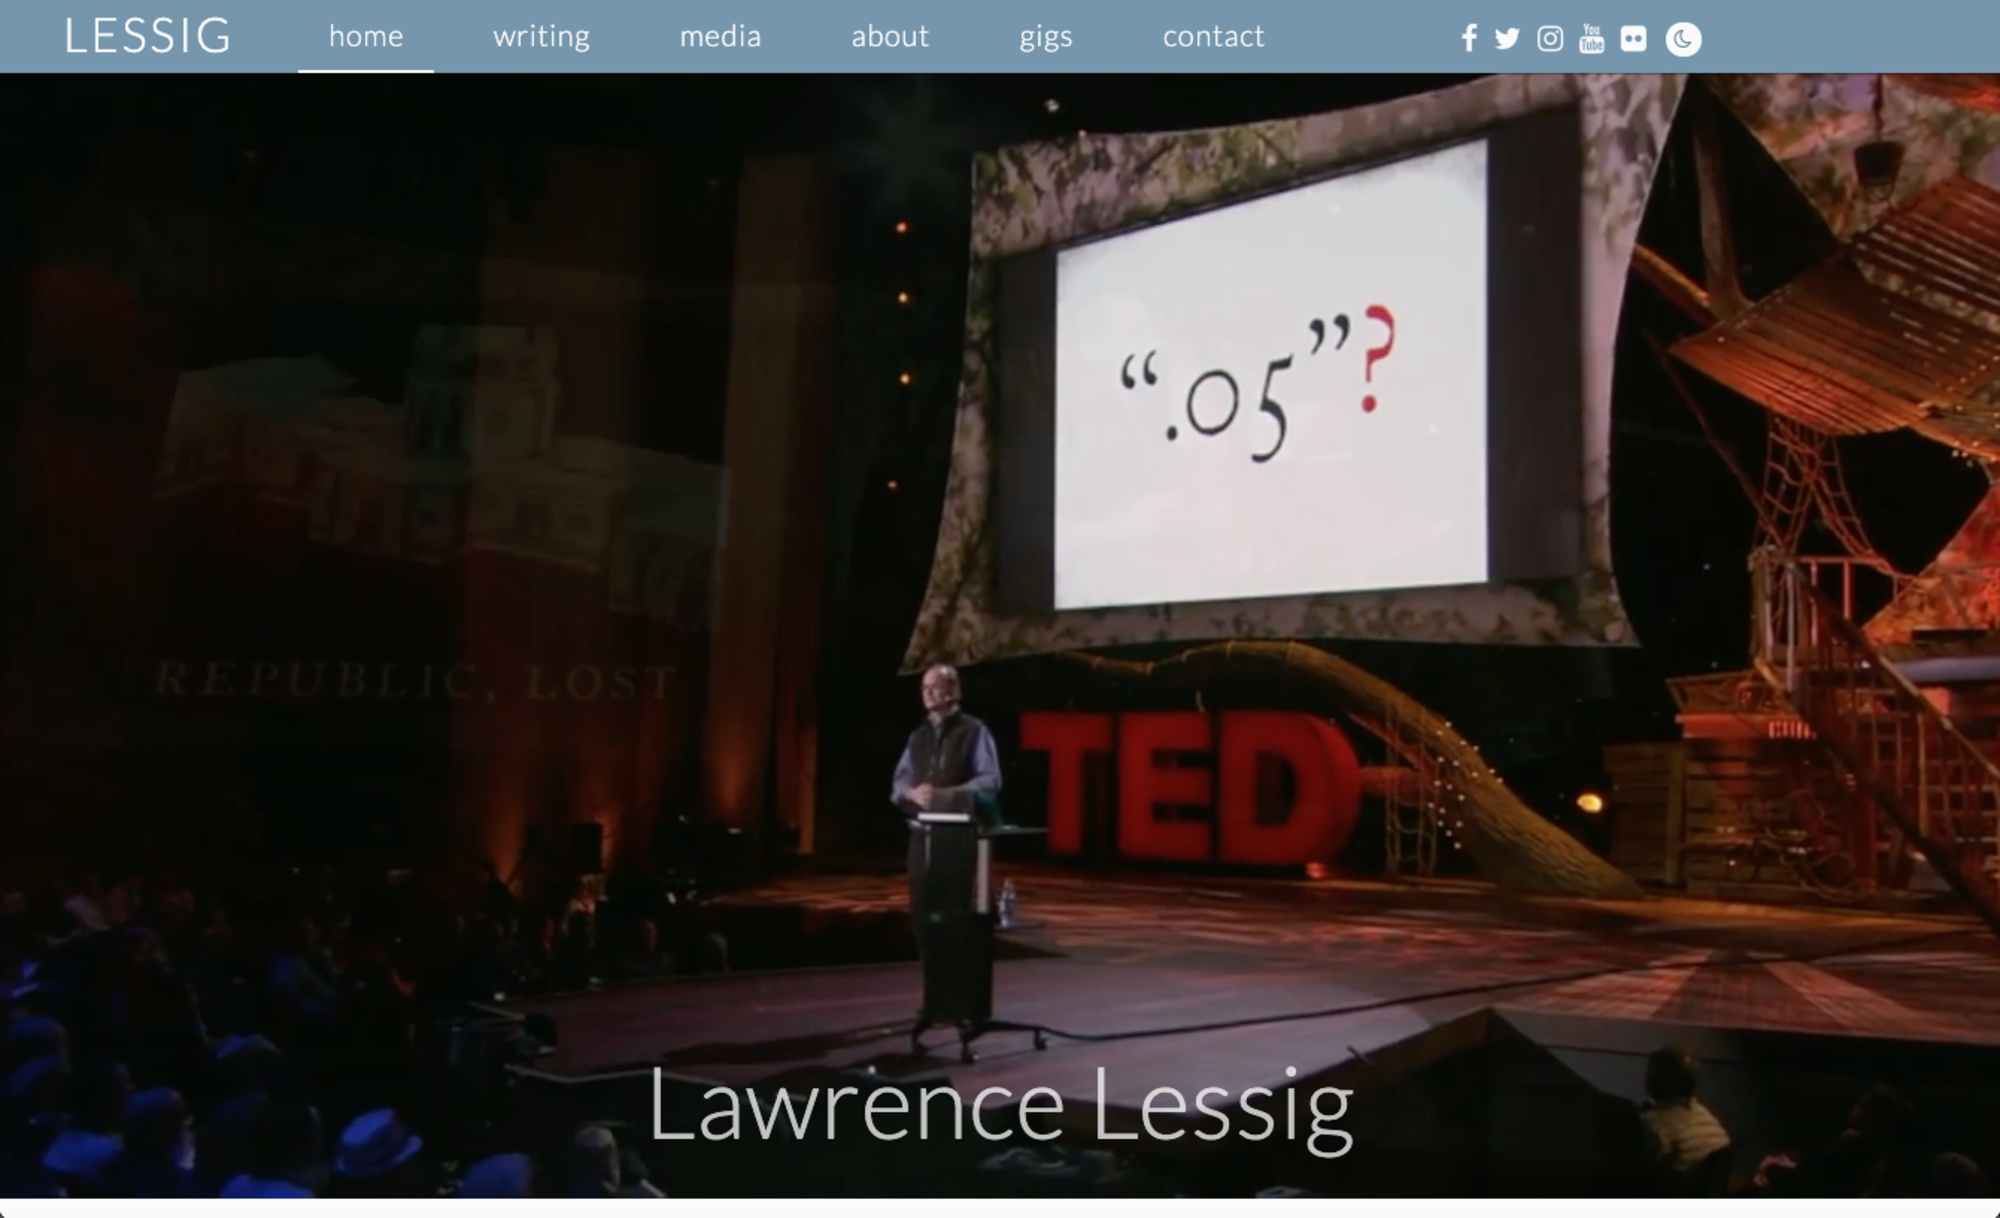 Lawrence Lessig homepage boston web design